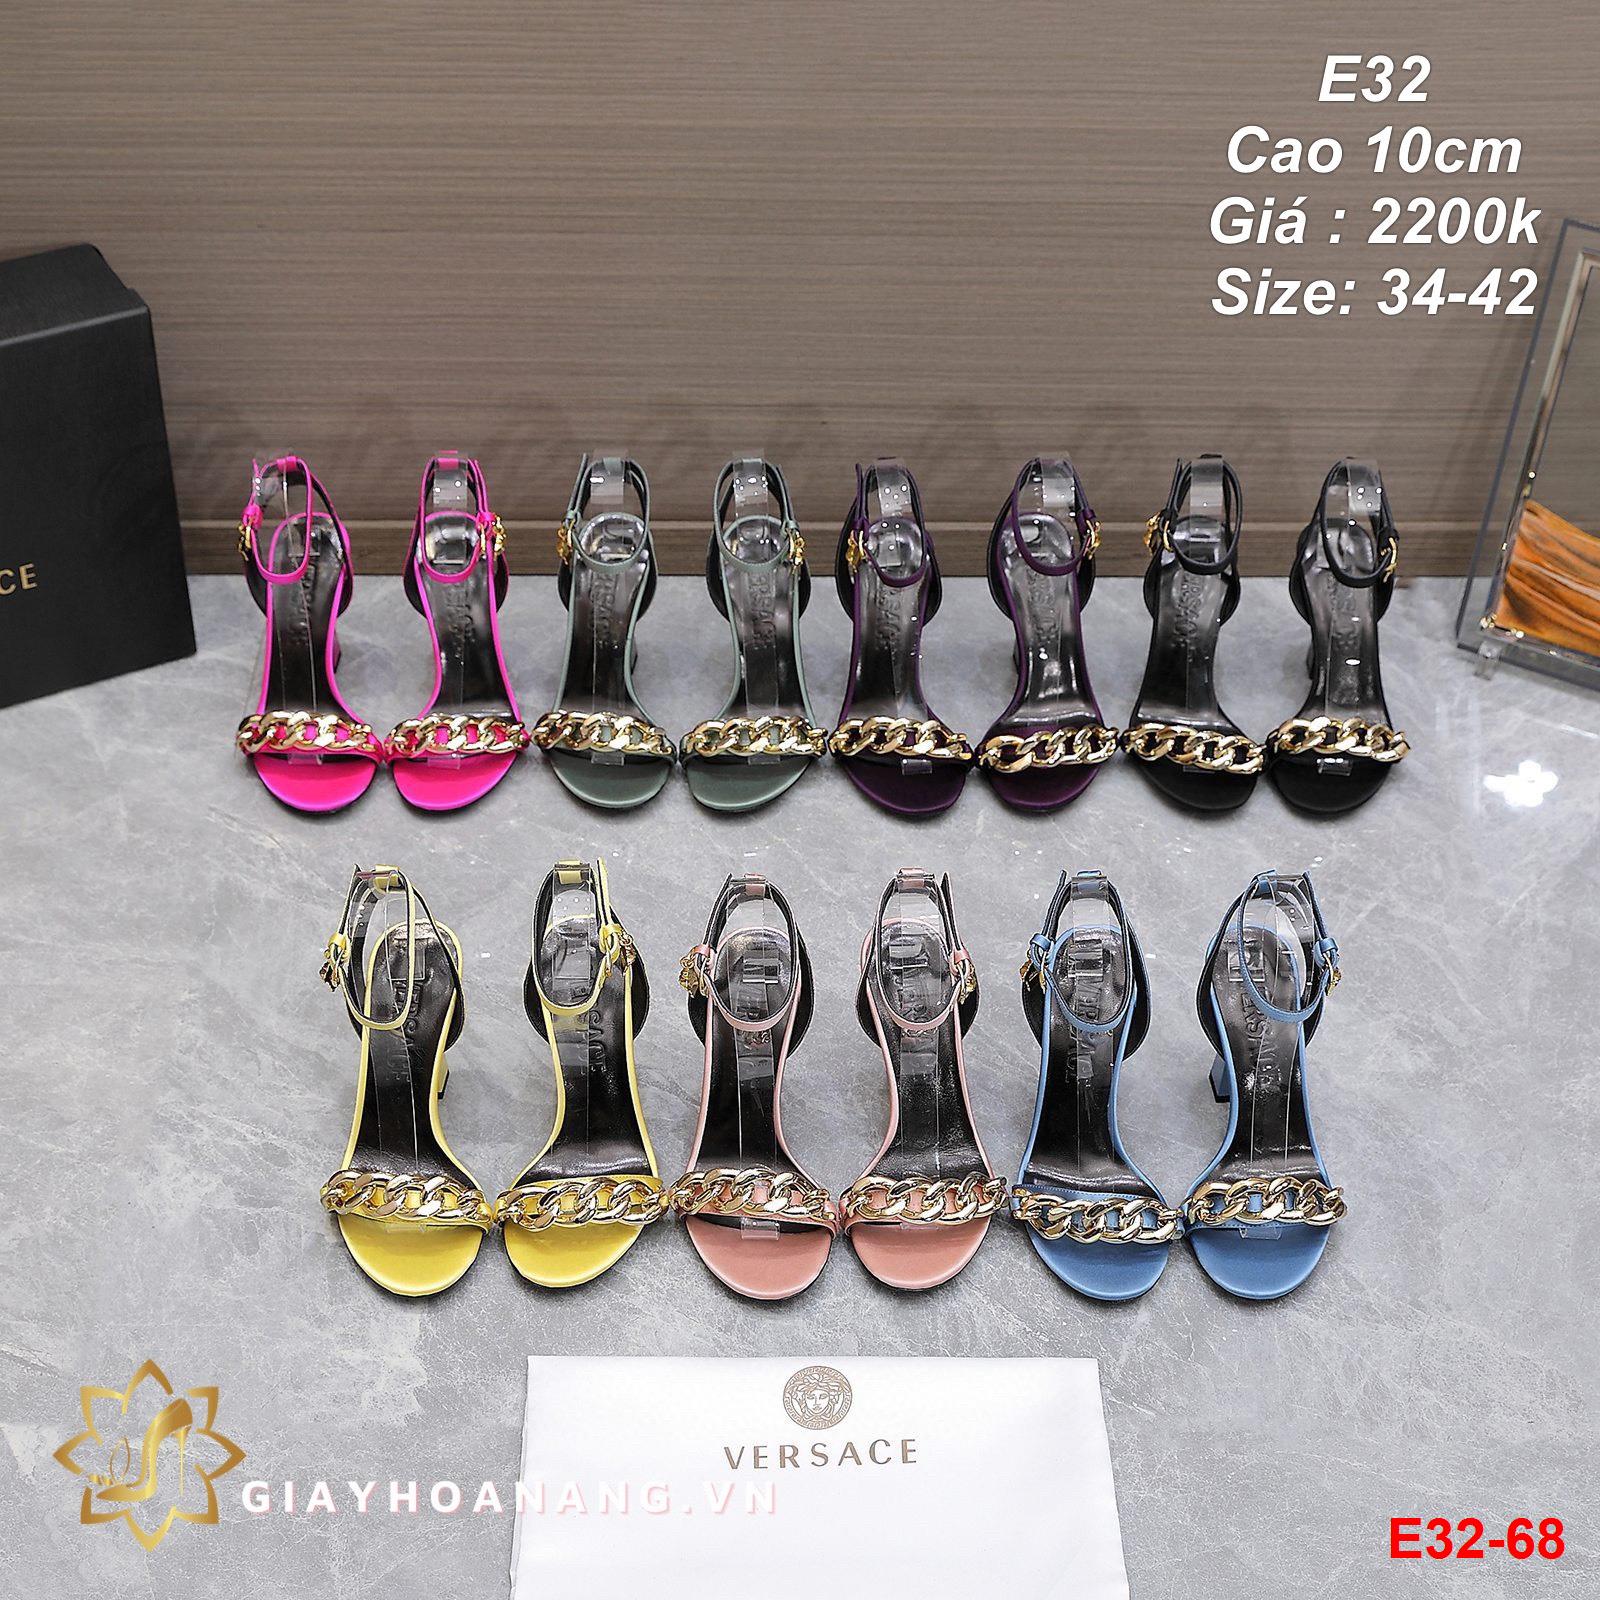 E32-68 Versace sandal cao 10cm siêu cấp